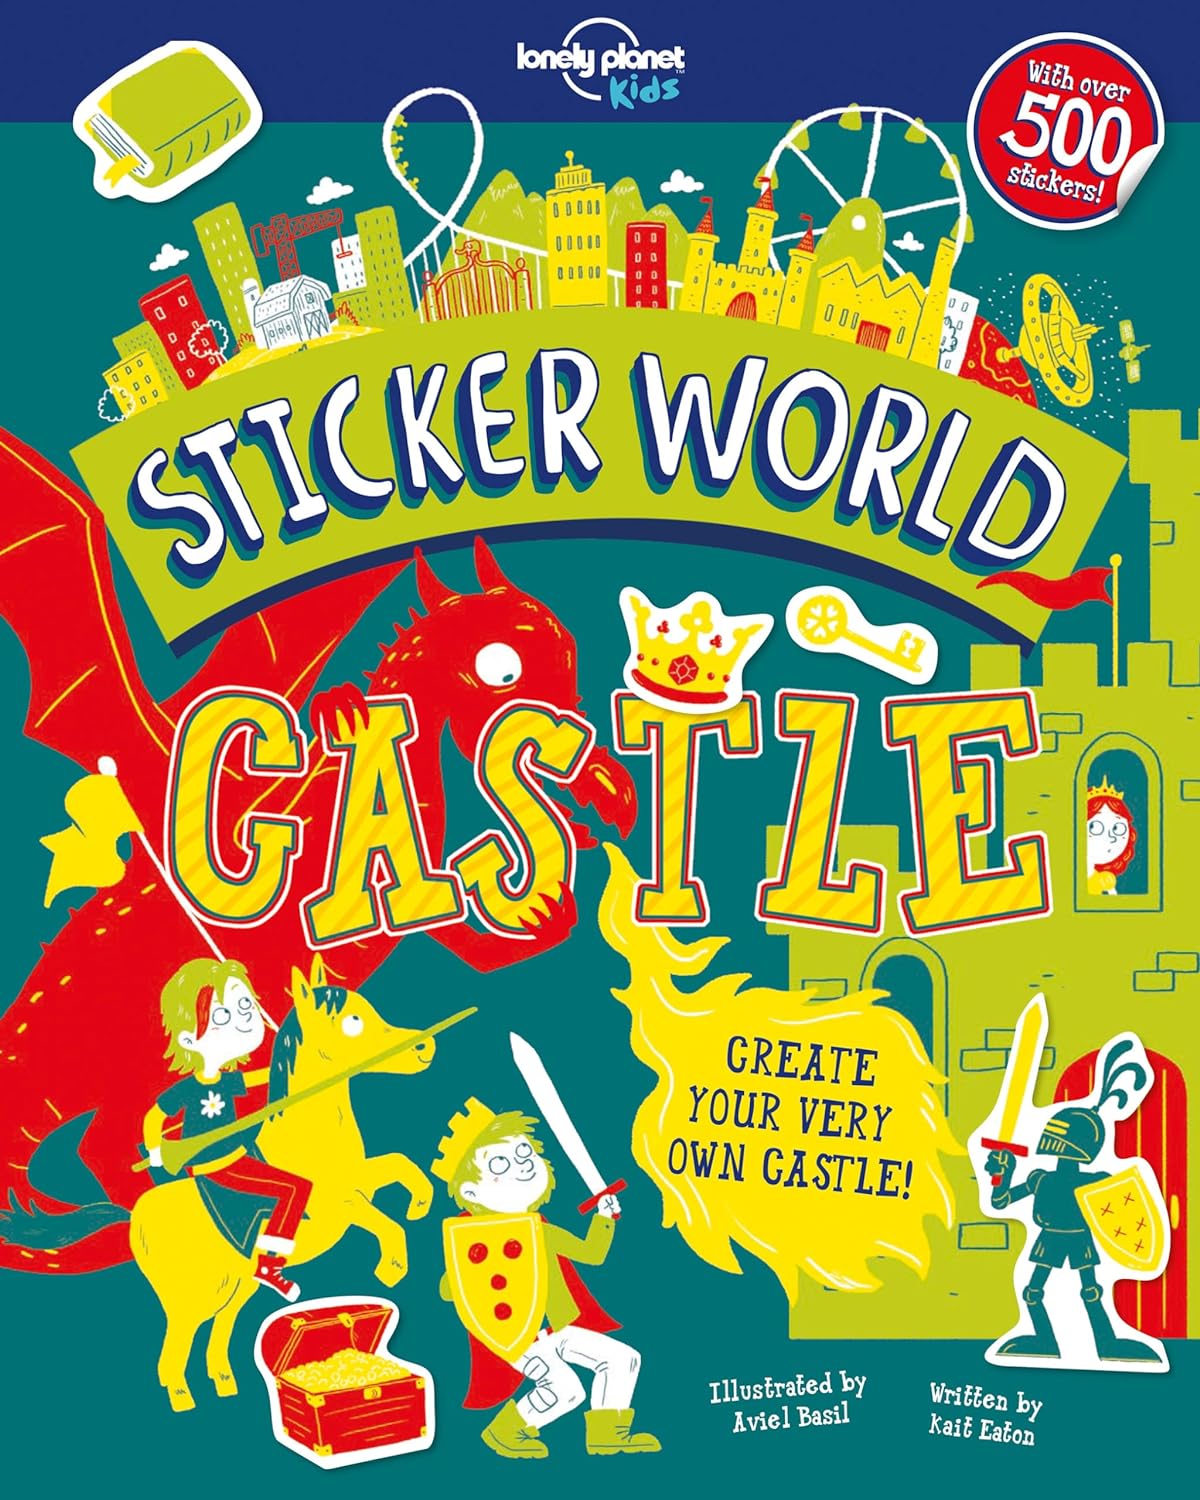 Sticker World Castle